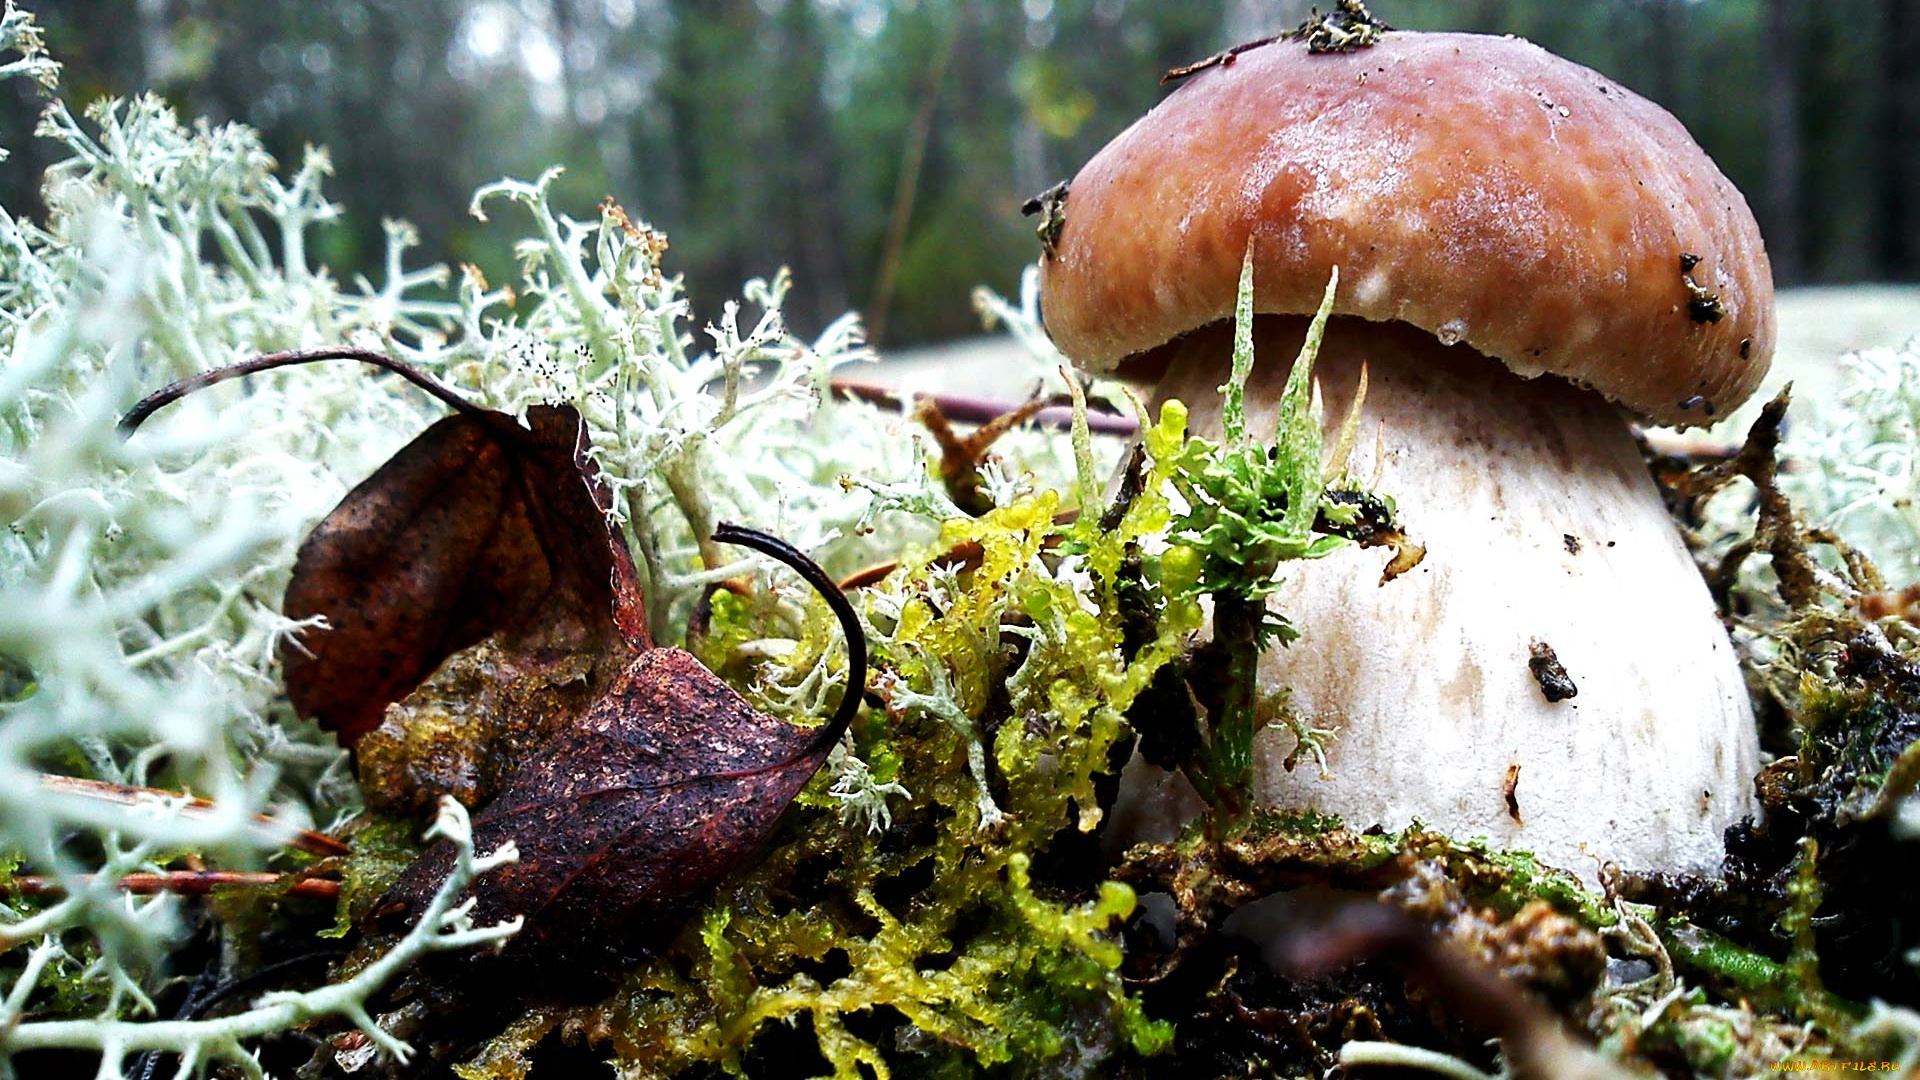 mushroom, природа, грибы, трав, мох, листья, боровик, капли, лес